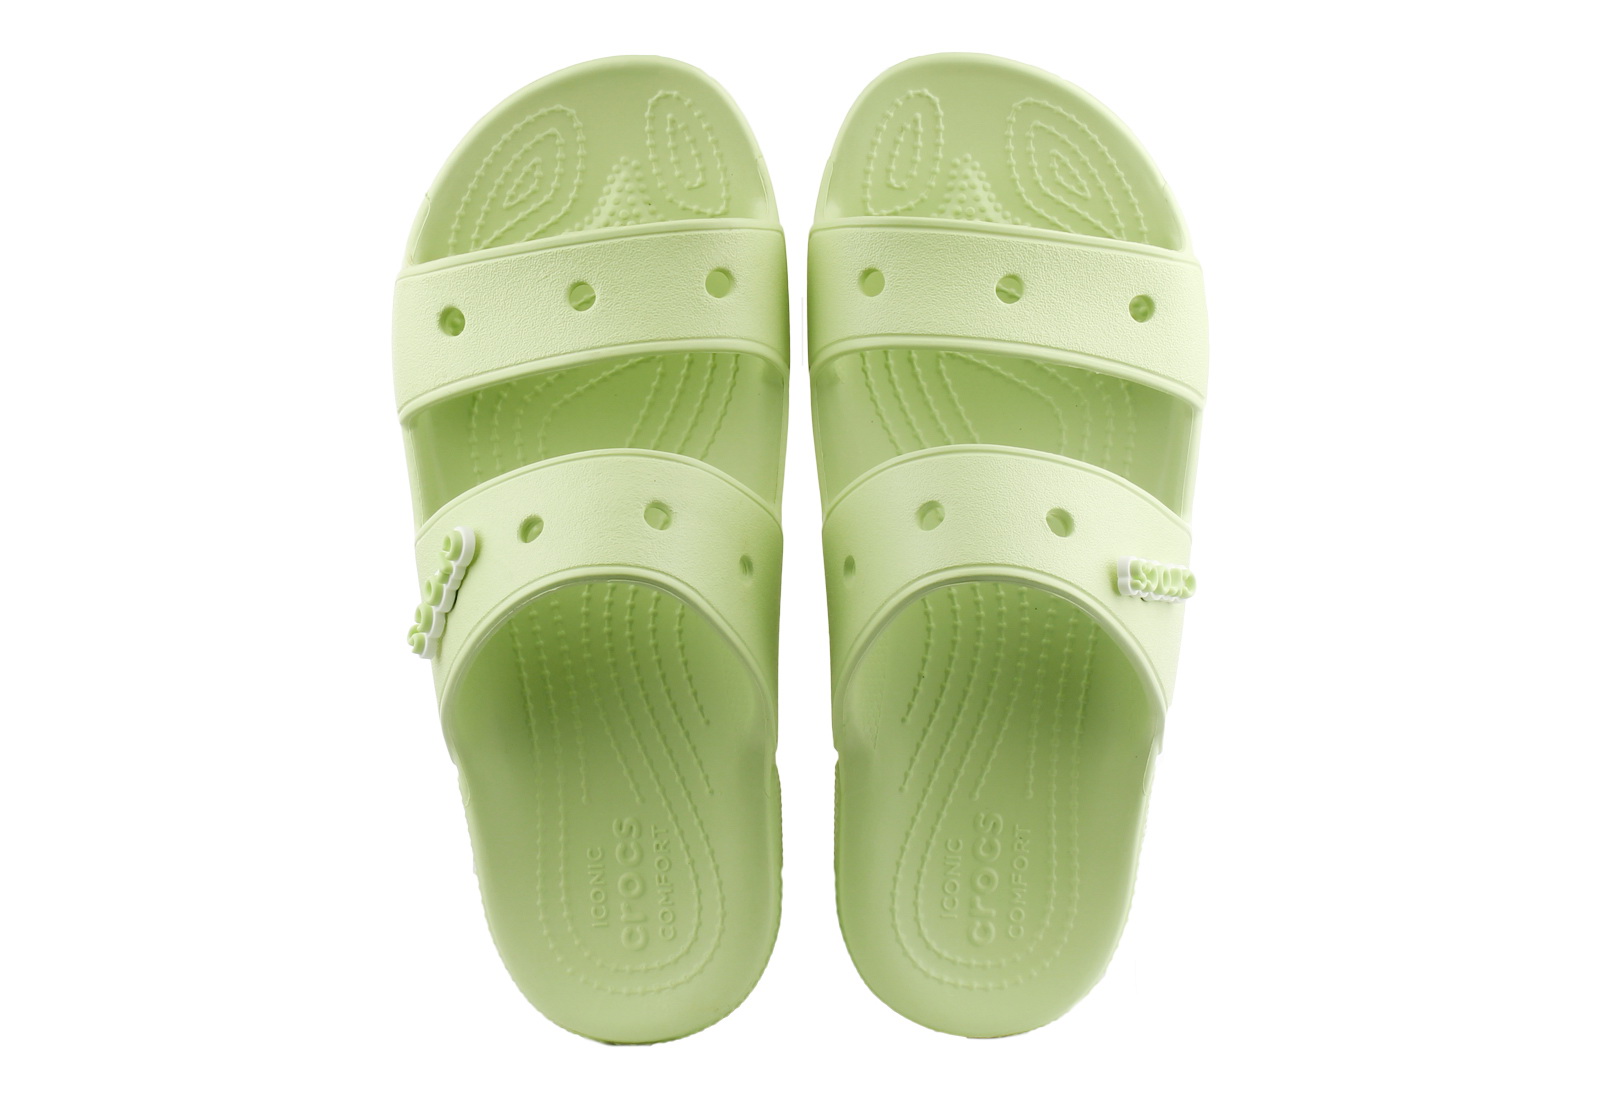 Crocs Papucs Classic Crocs Sandal